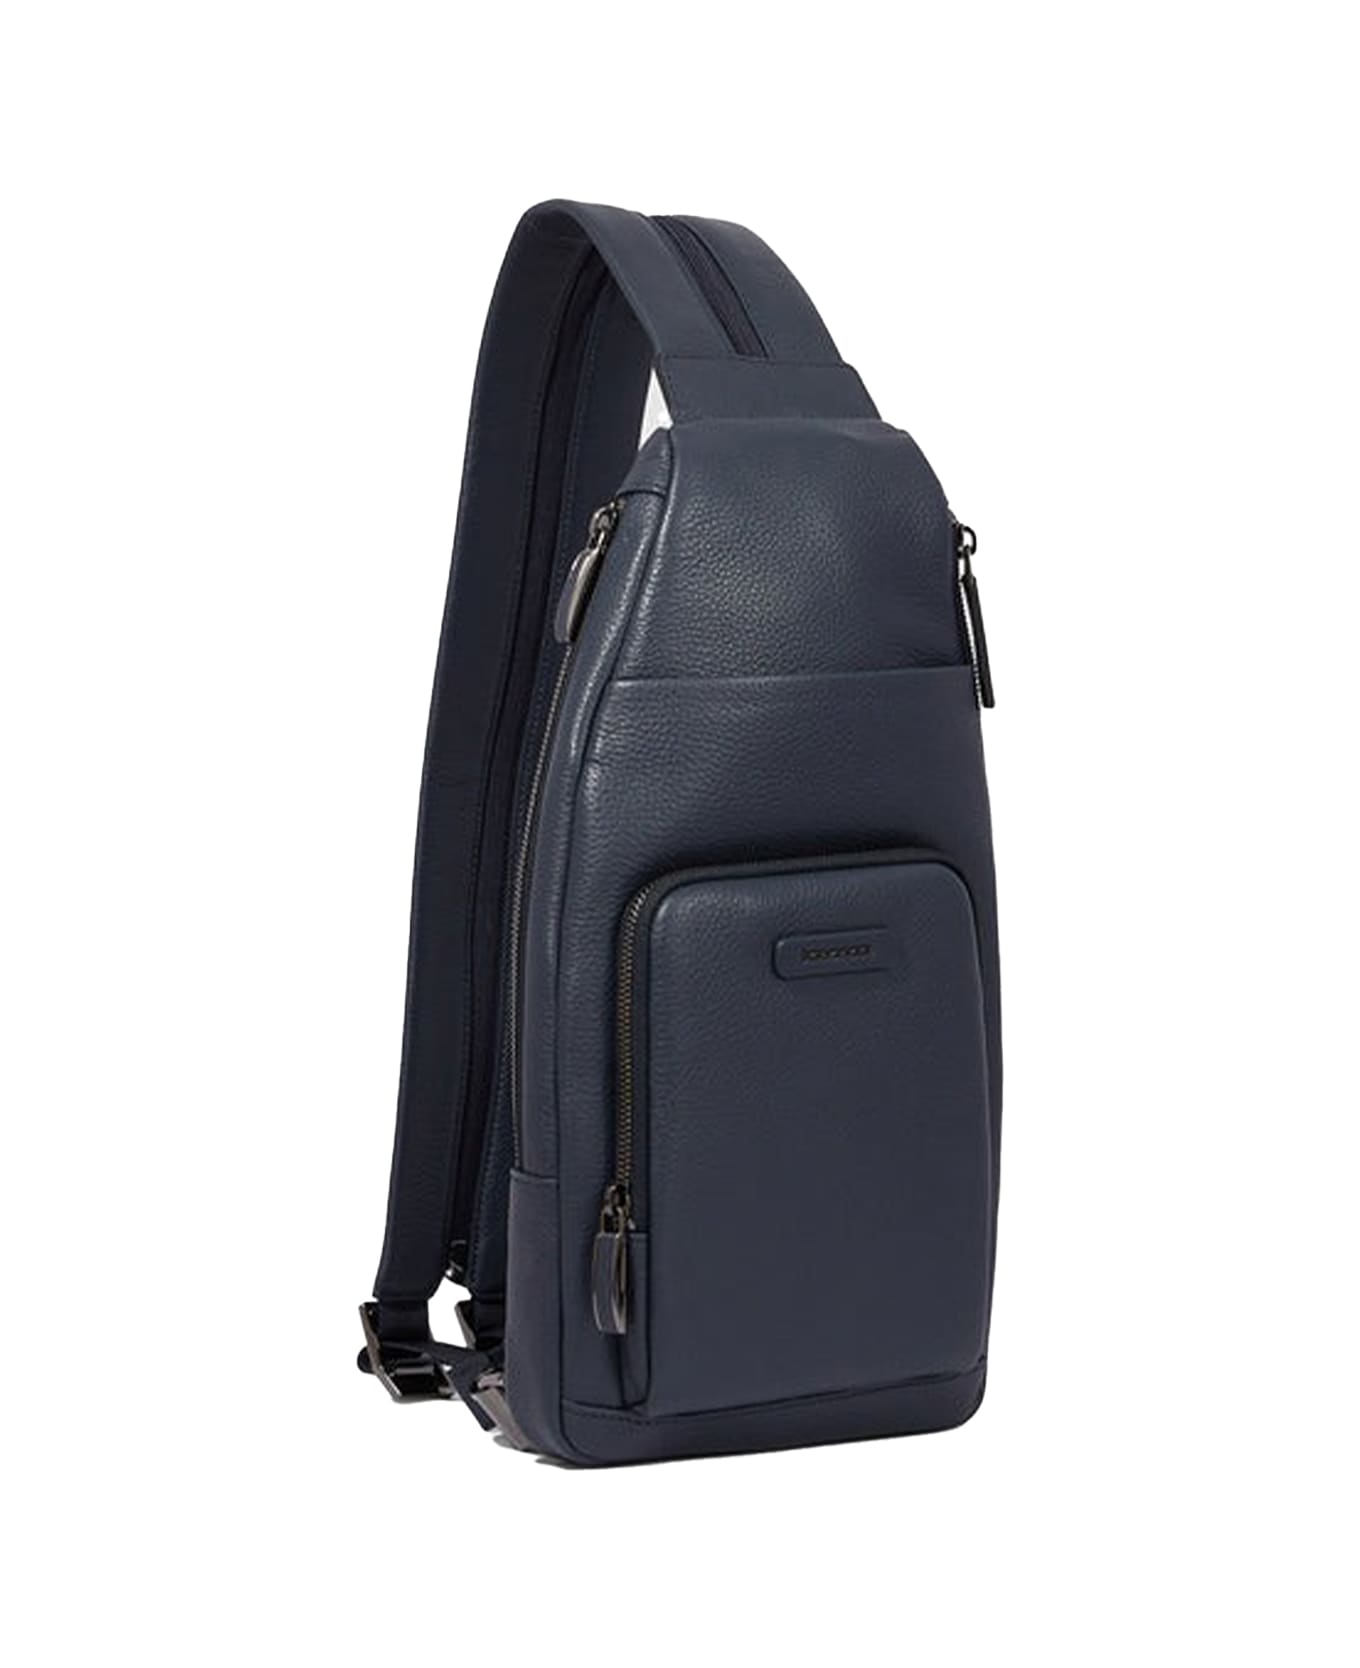 Piquadro Shoulder Bag For Ipad Mini, Portable As A Backpack - Blu